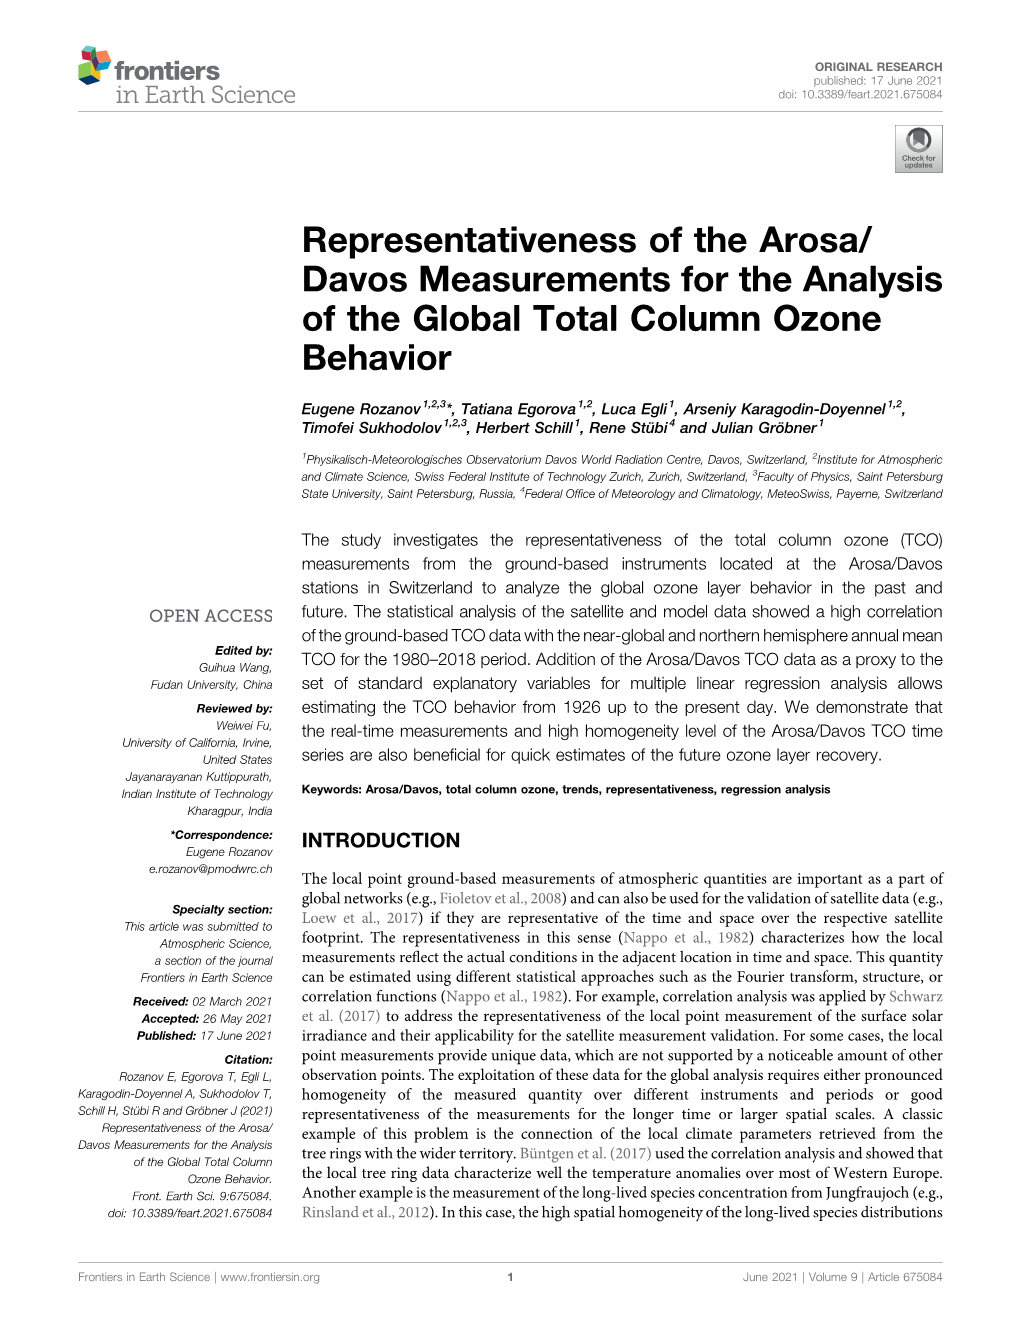 Representativeness of the Arosa/ Davos Measurements for the Analysis of the Global Total Column Ozone Behavior